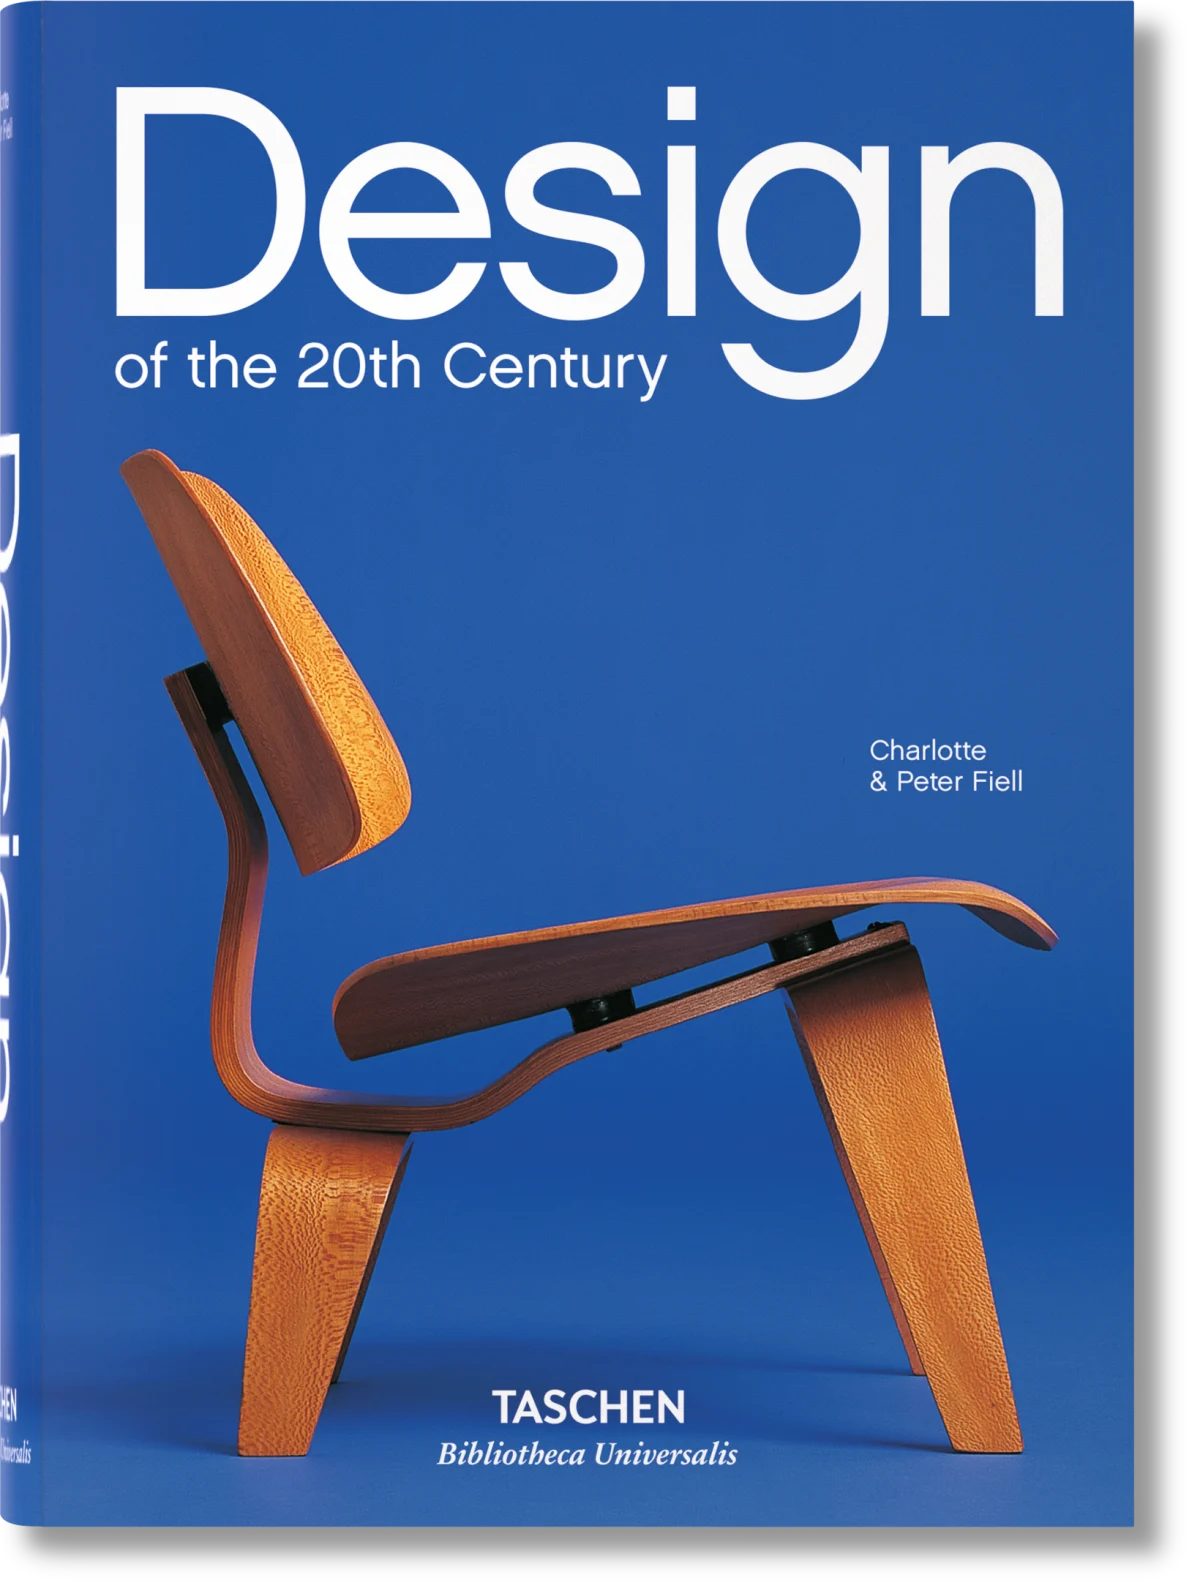 Design du XXe siècle